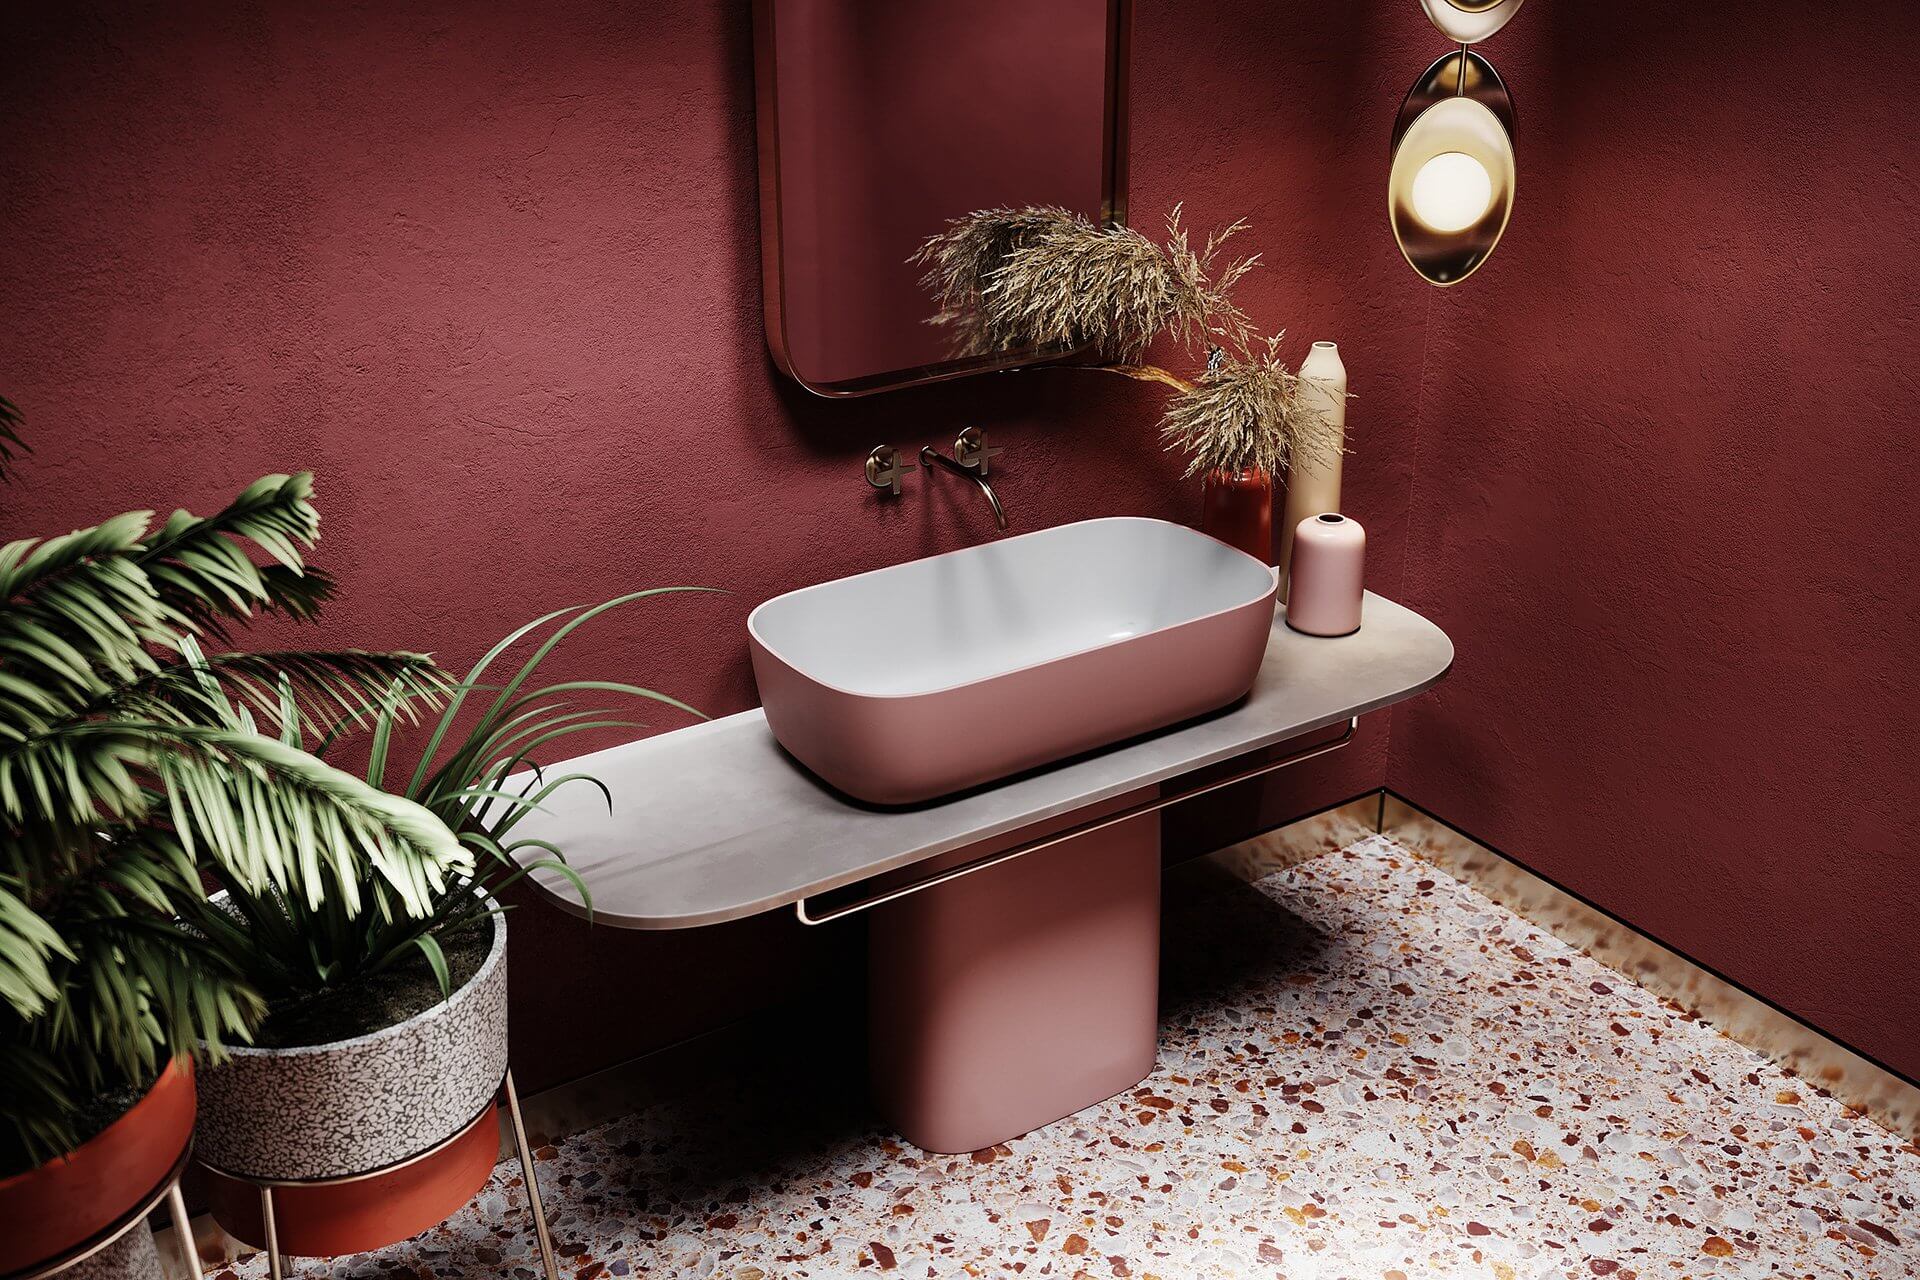 Bathroom design mitte wash basin red 3 - cgi visualization